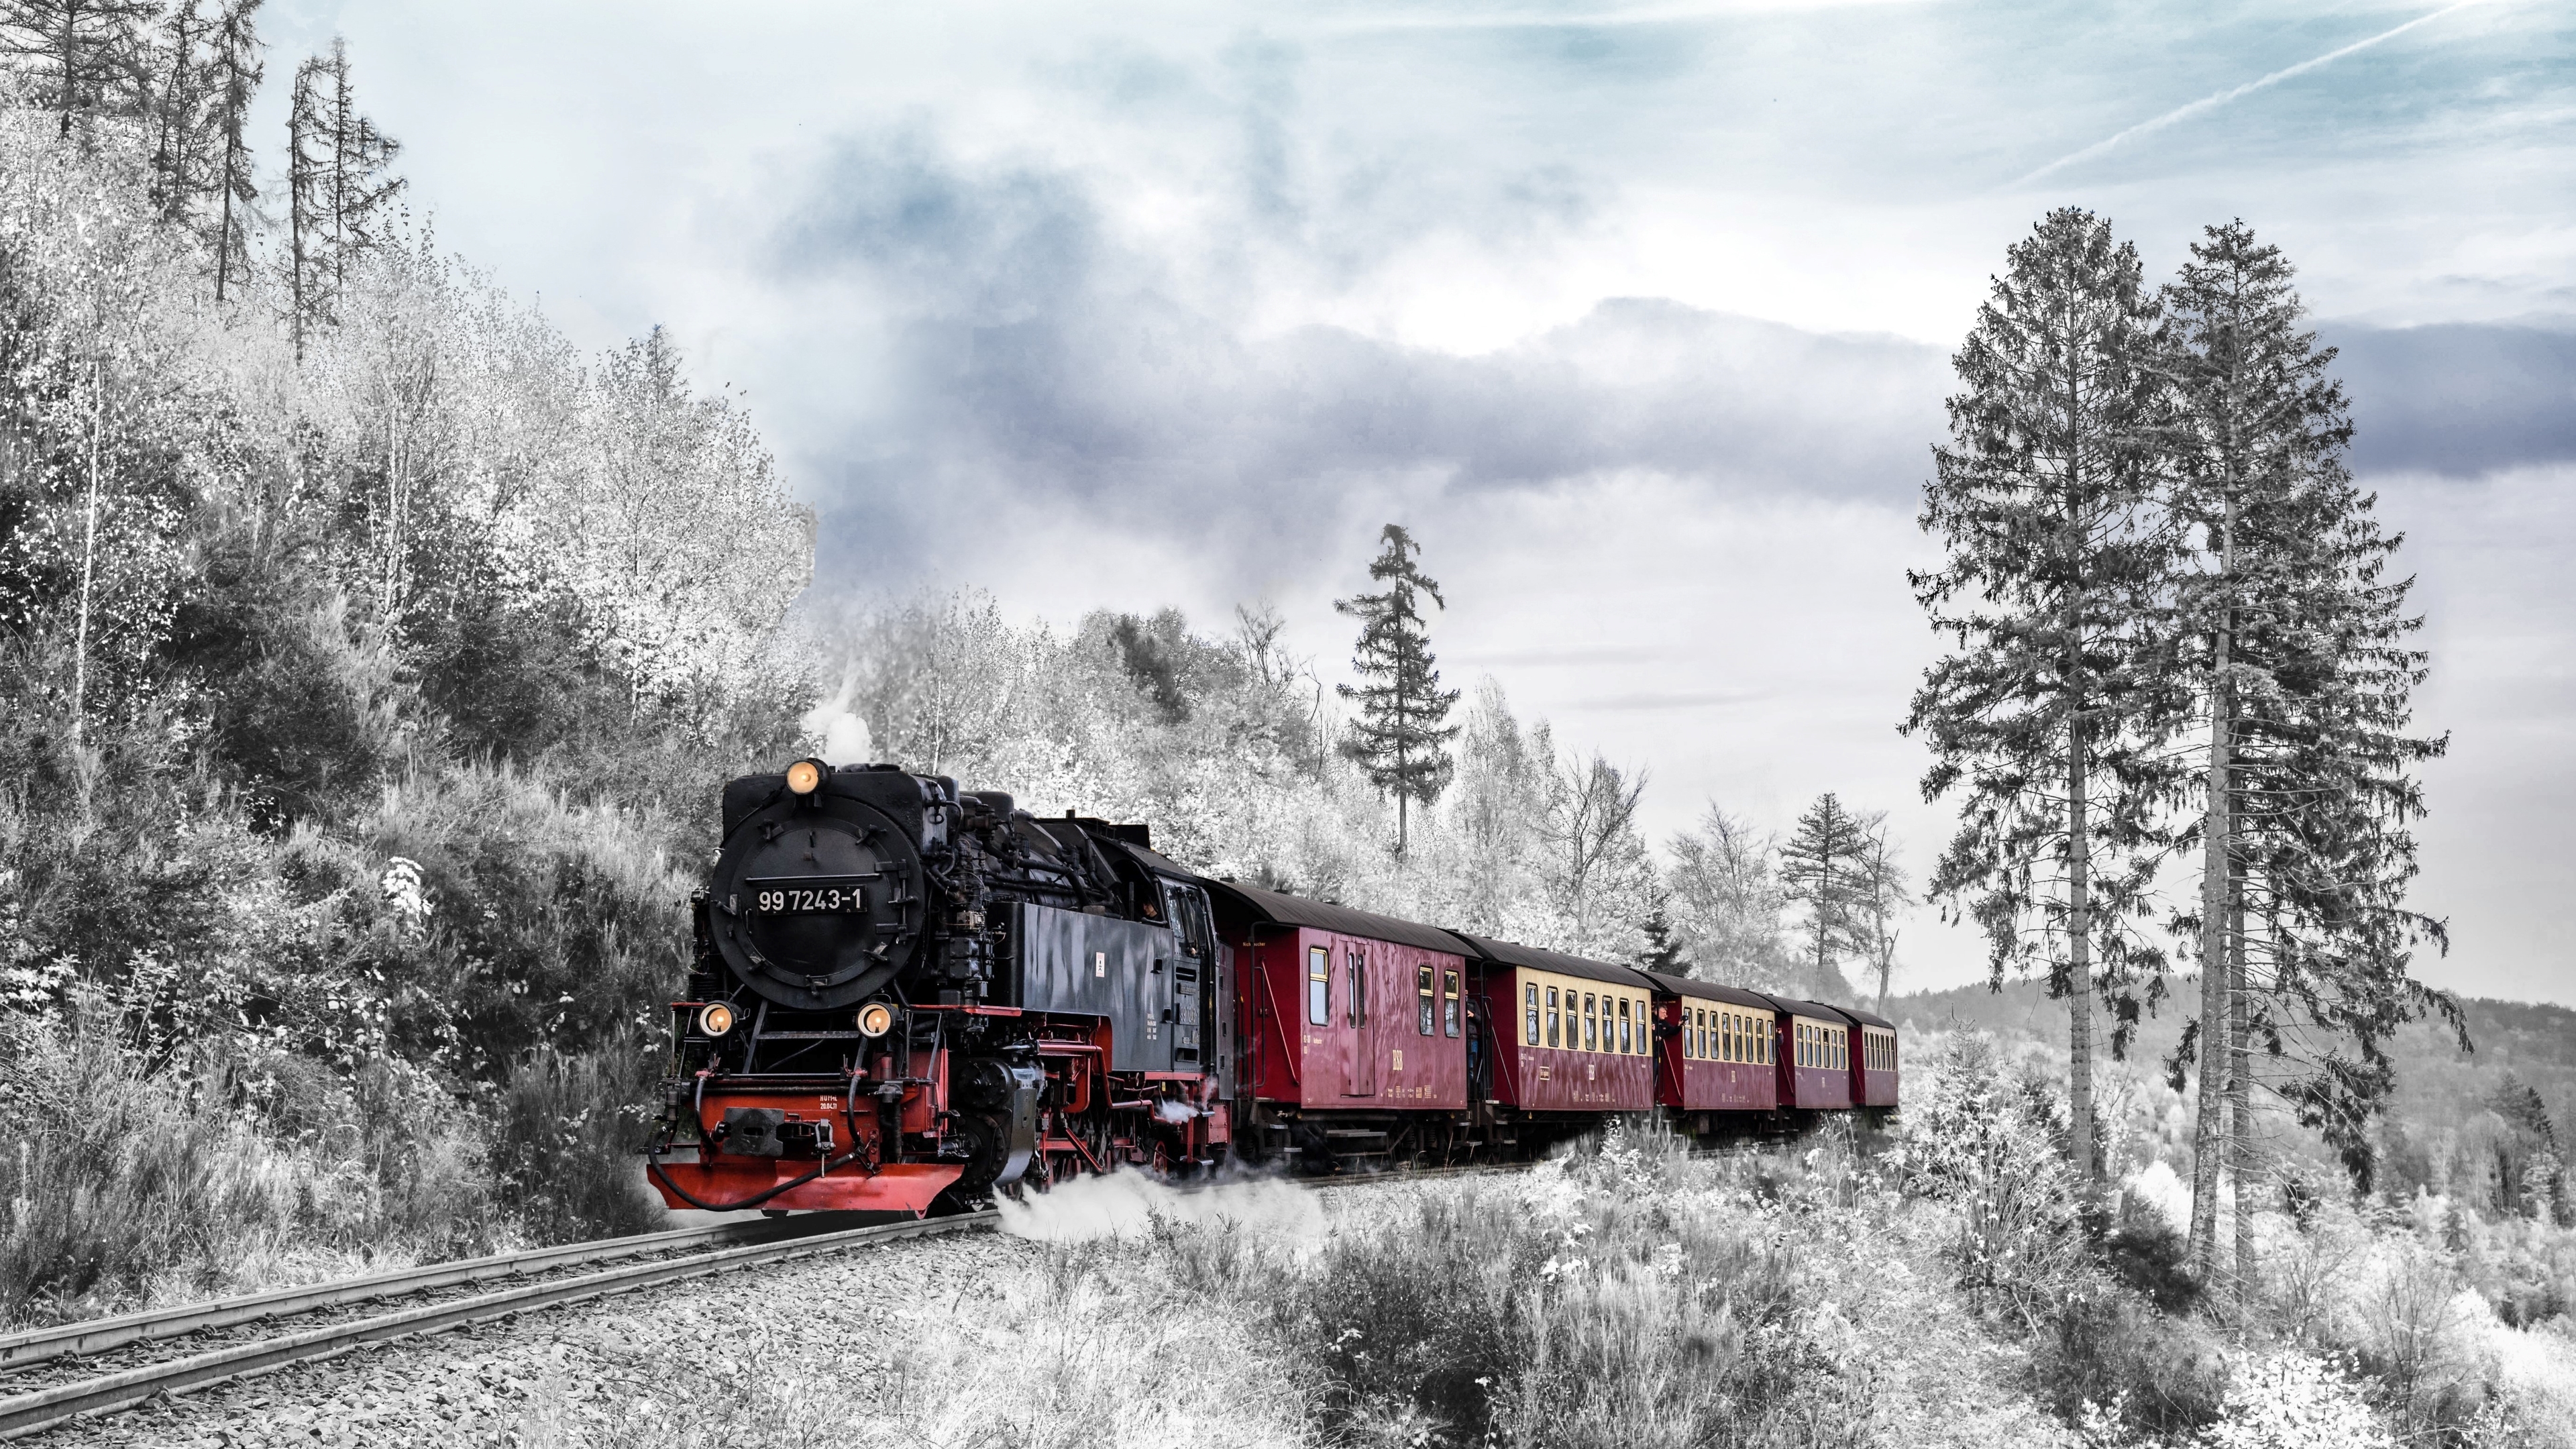 vehicles, steam train, snow, train, winter